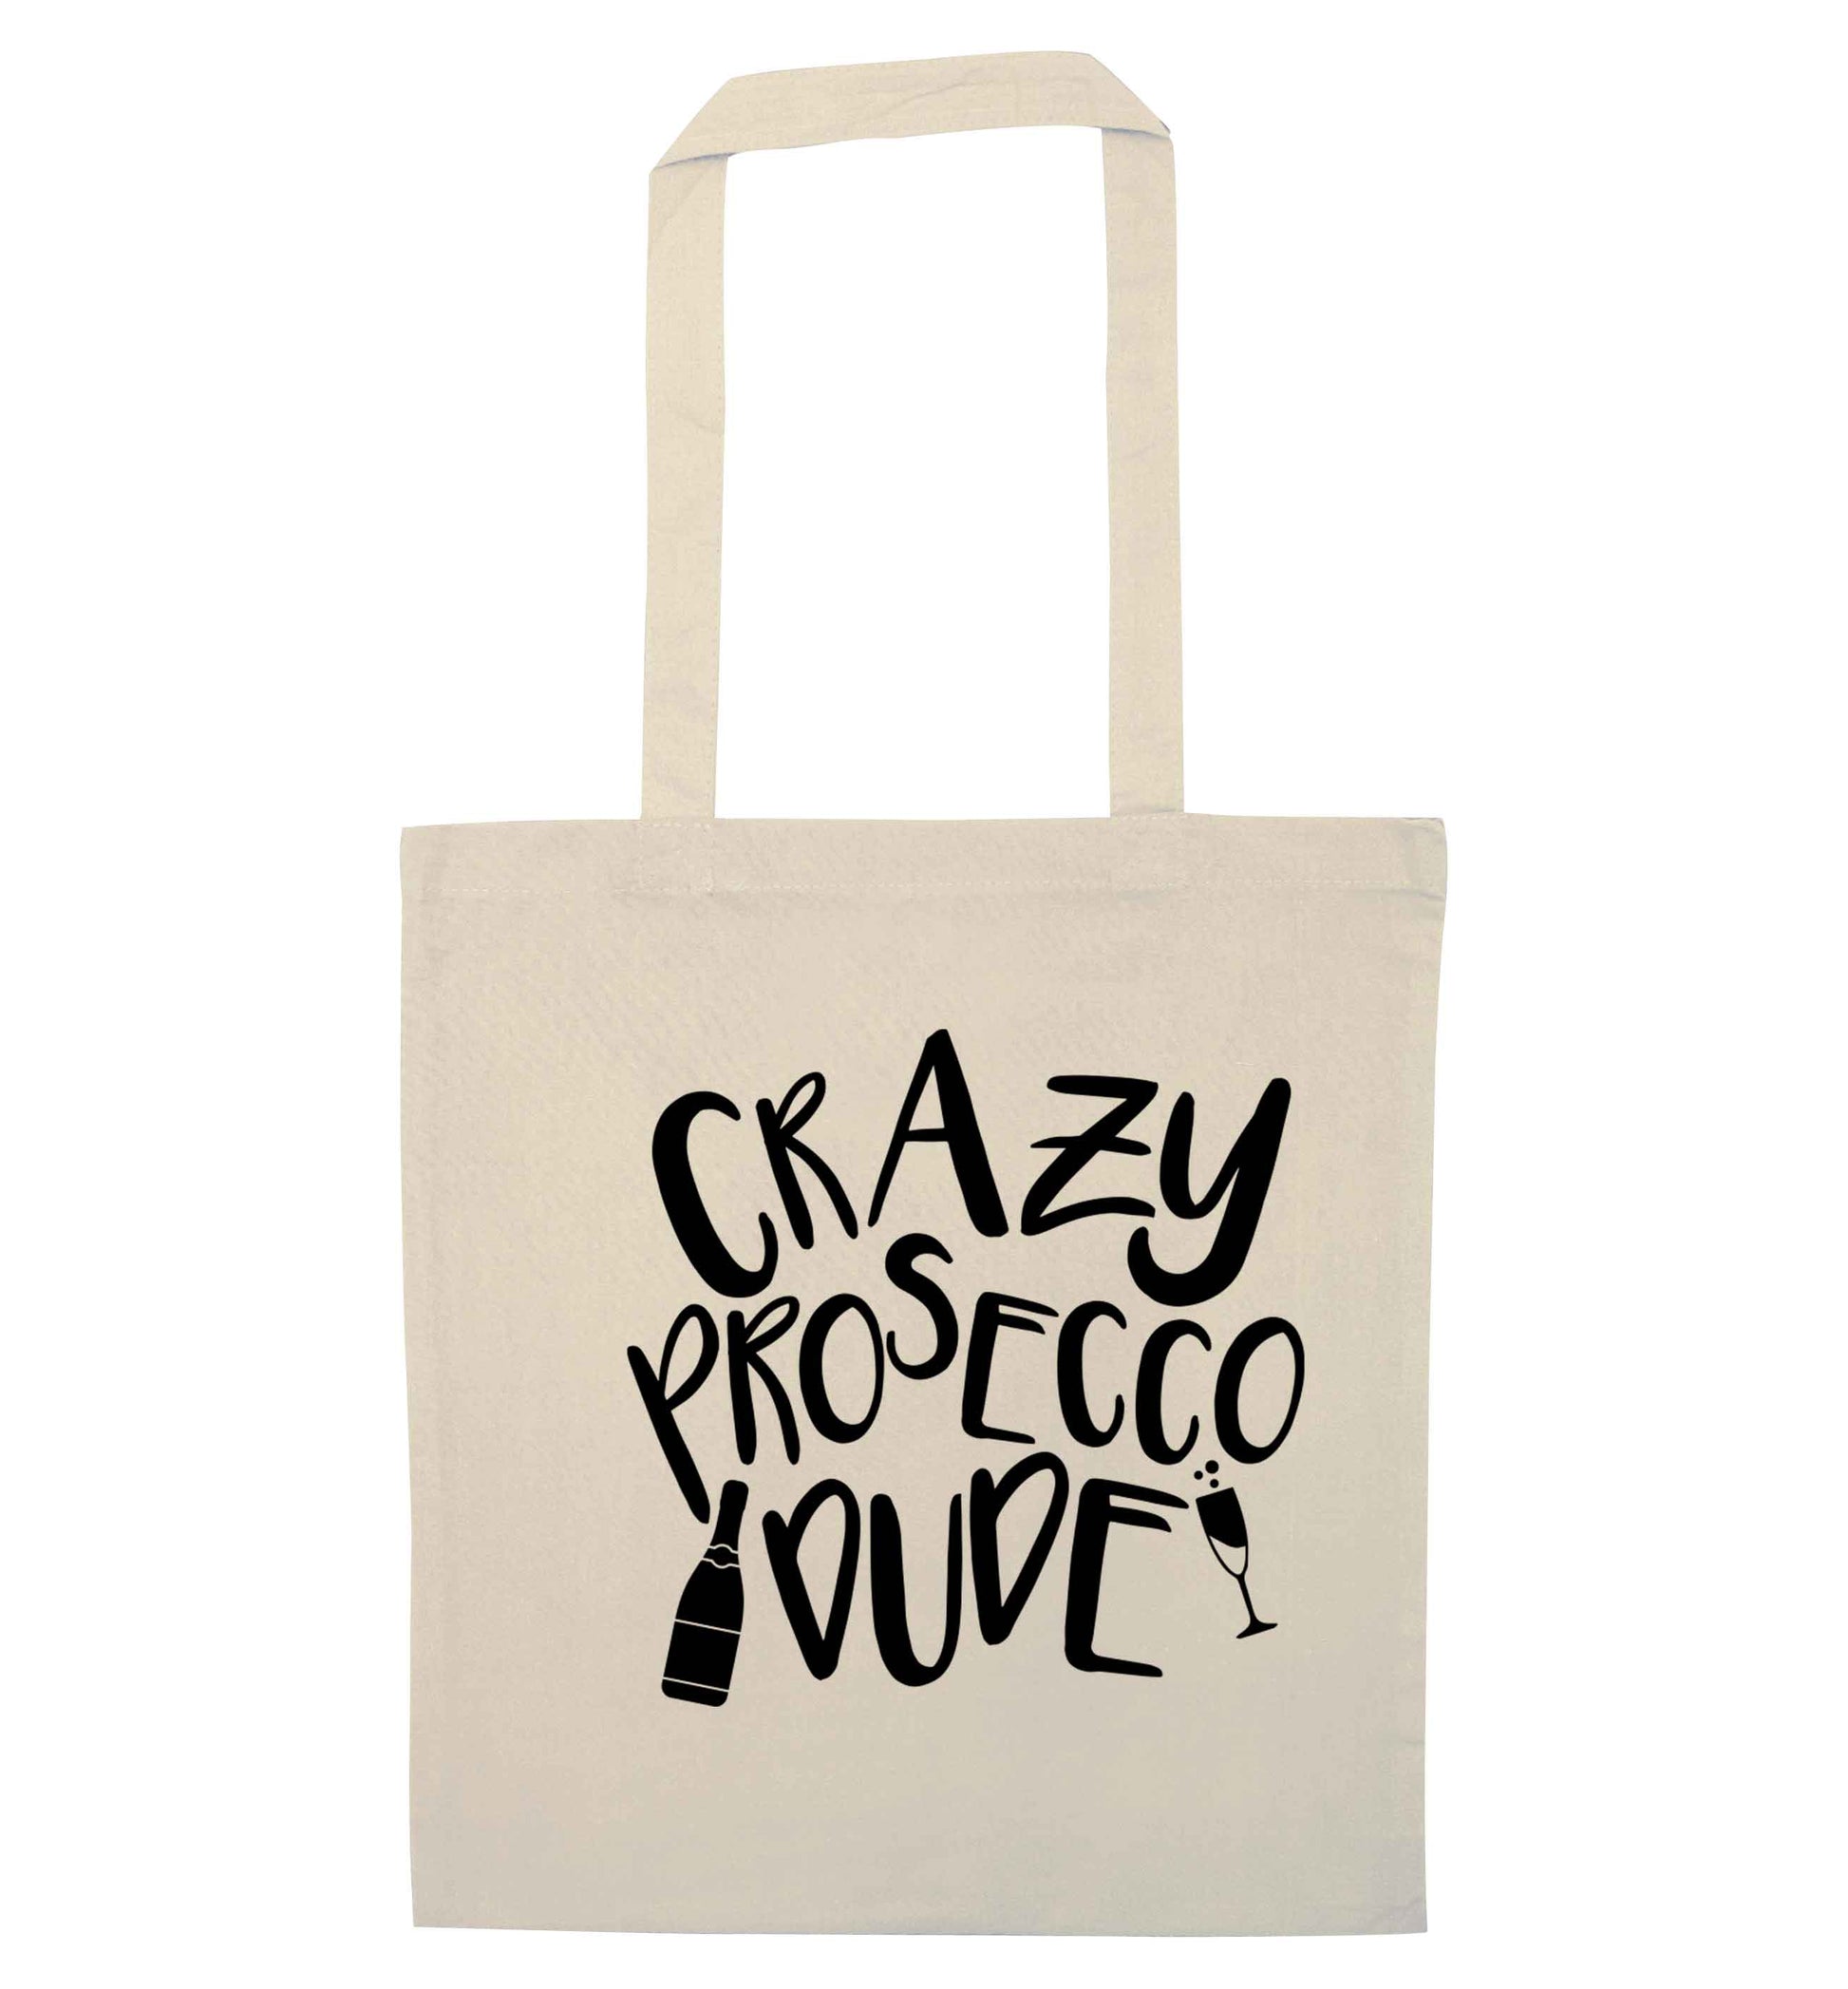 Crazy prosecco dude natural tote bag